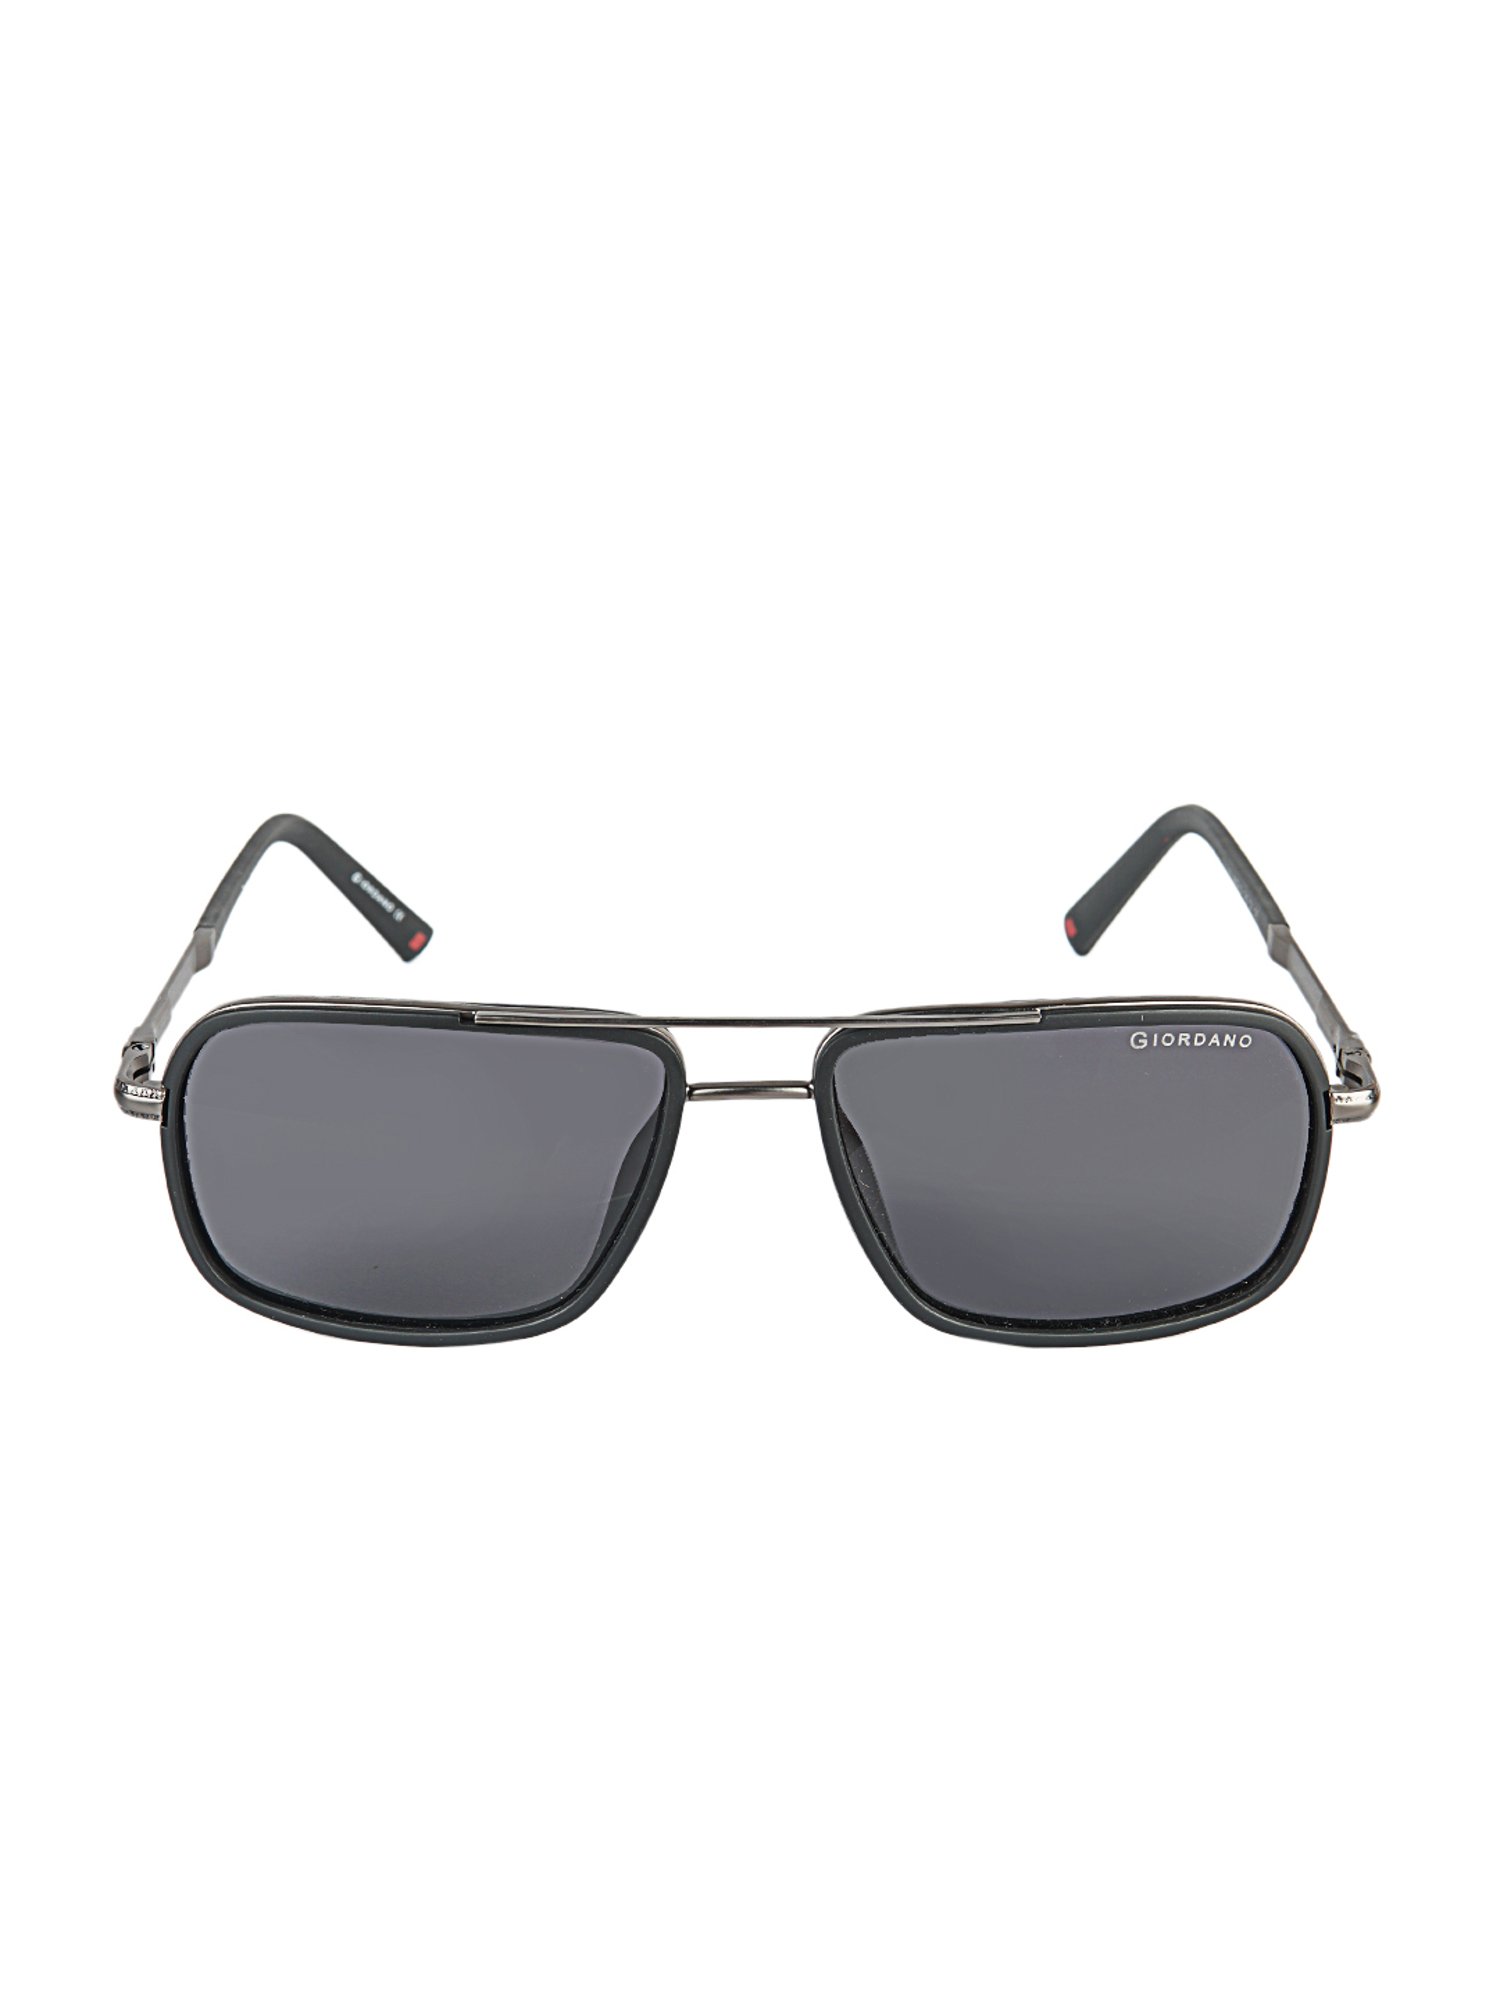 Designer Prescription Sunglasses 2024 | www.vmddlaw.com